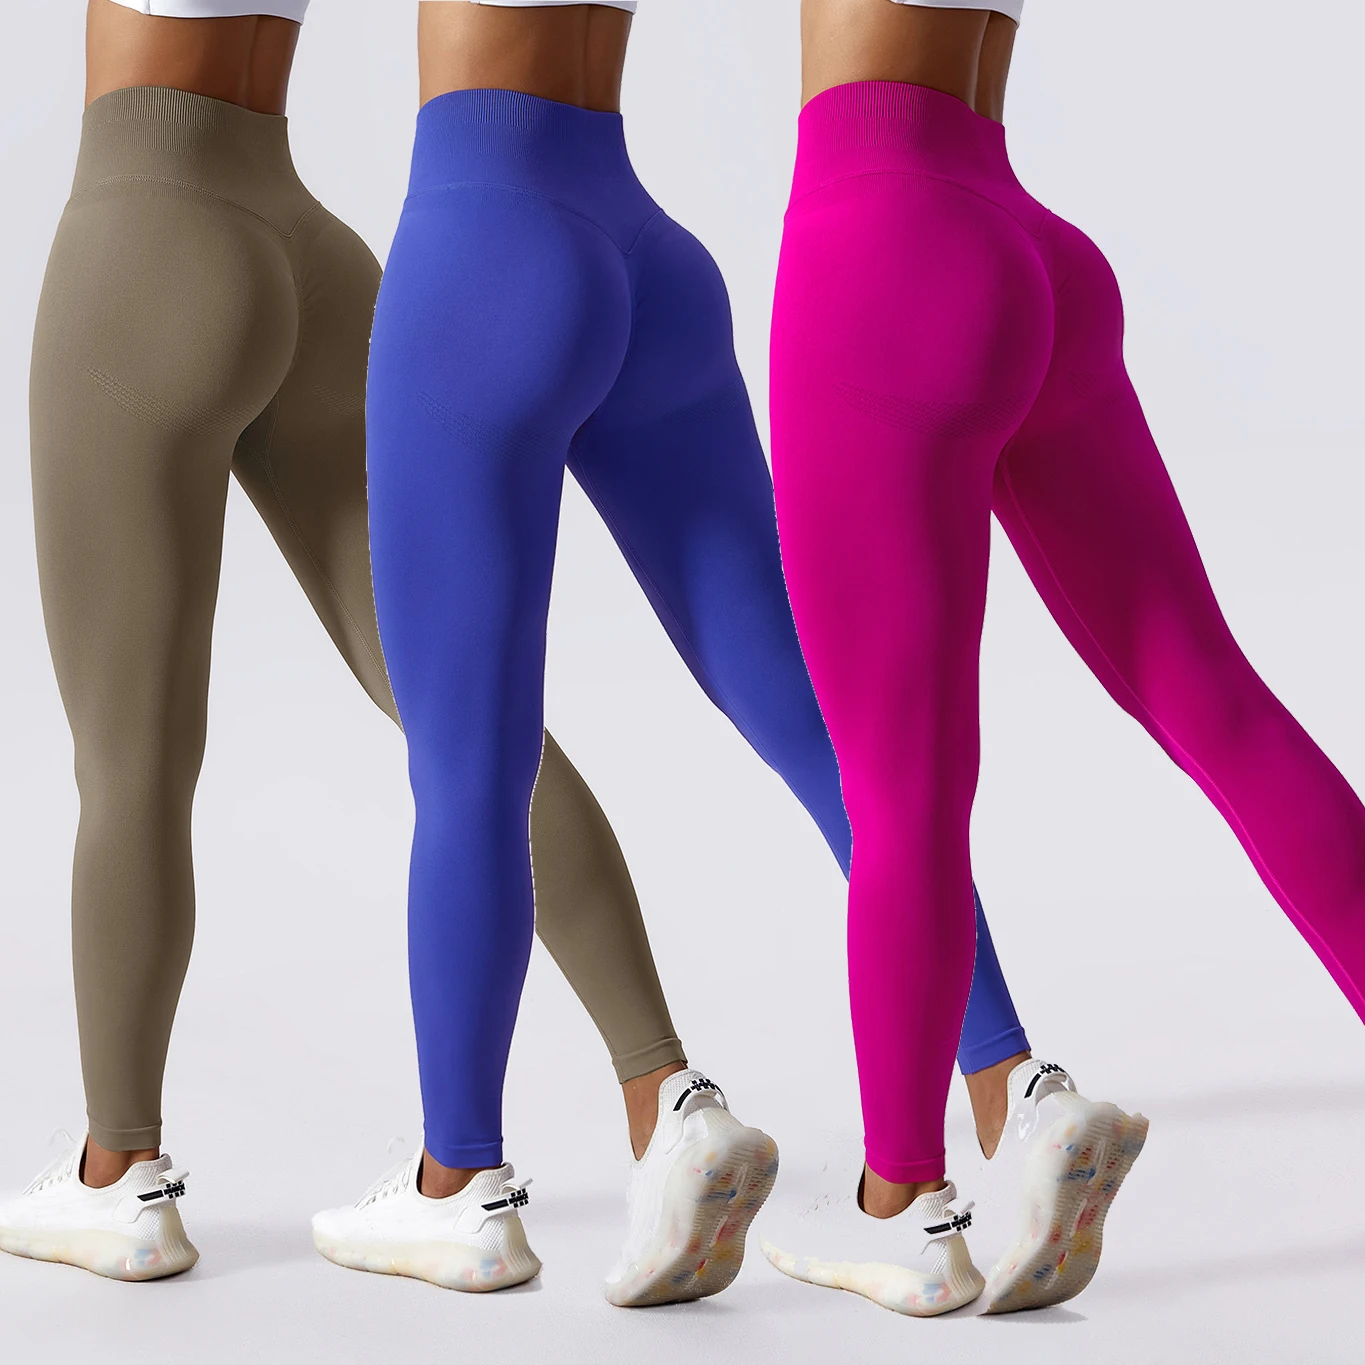 

YIYI Seamless High Stretchy Workout Compression Pants Gym Leggings High Waist Yoga Pants Tummy Control Slimming Booty